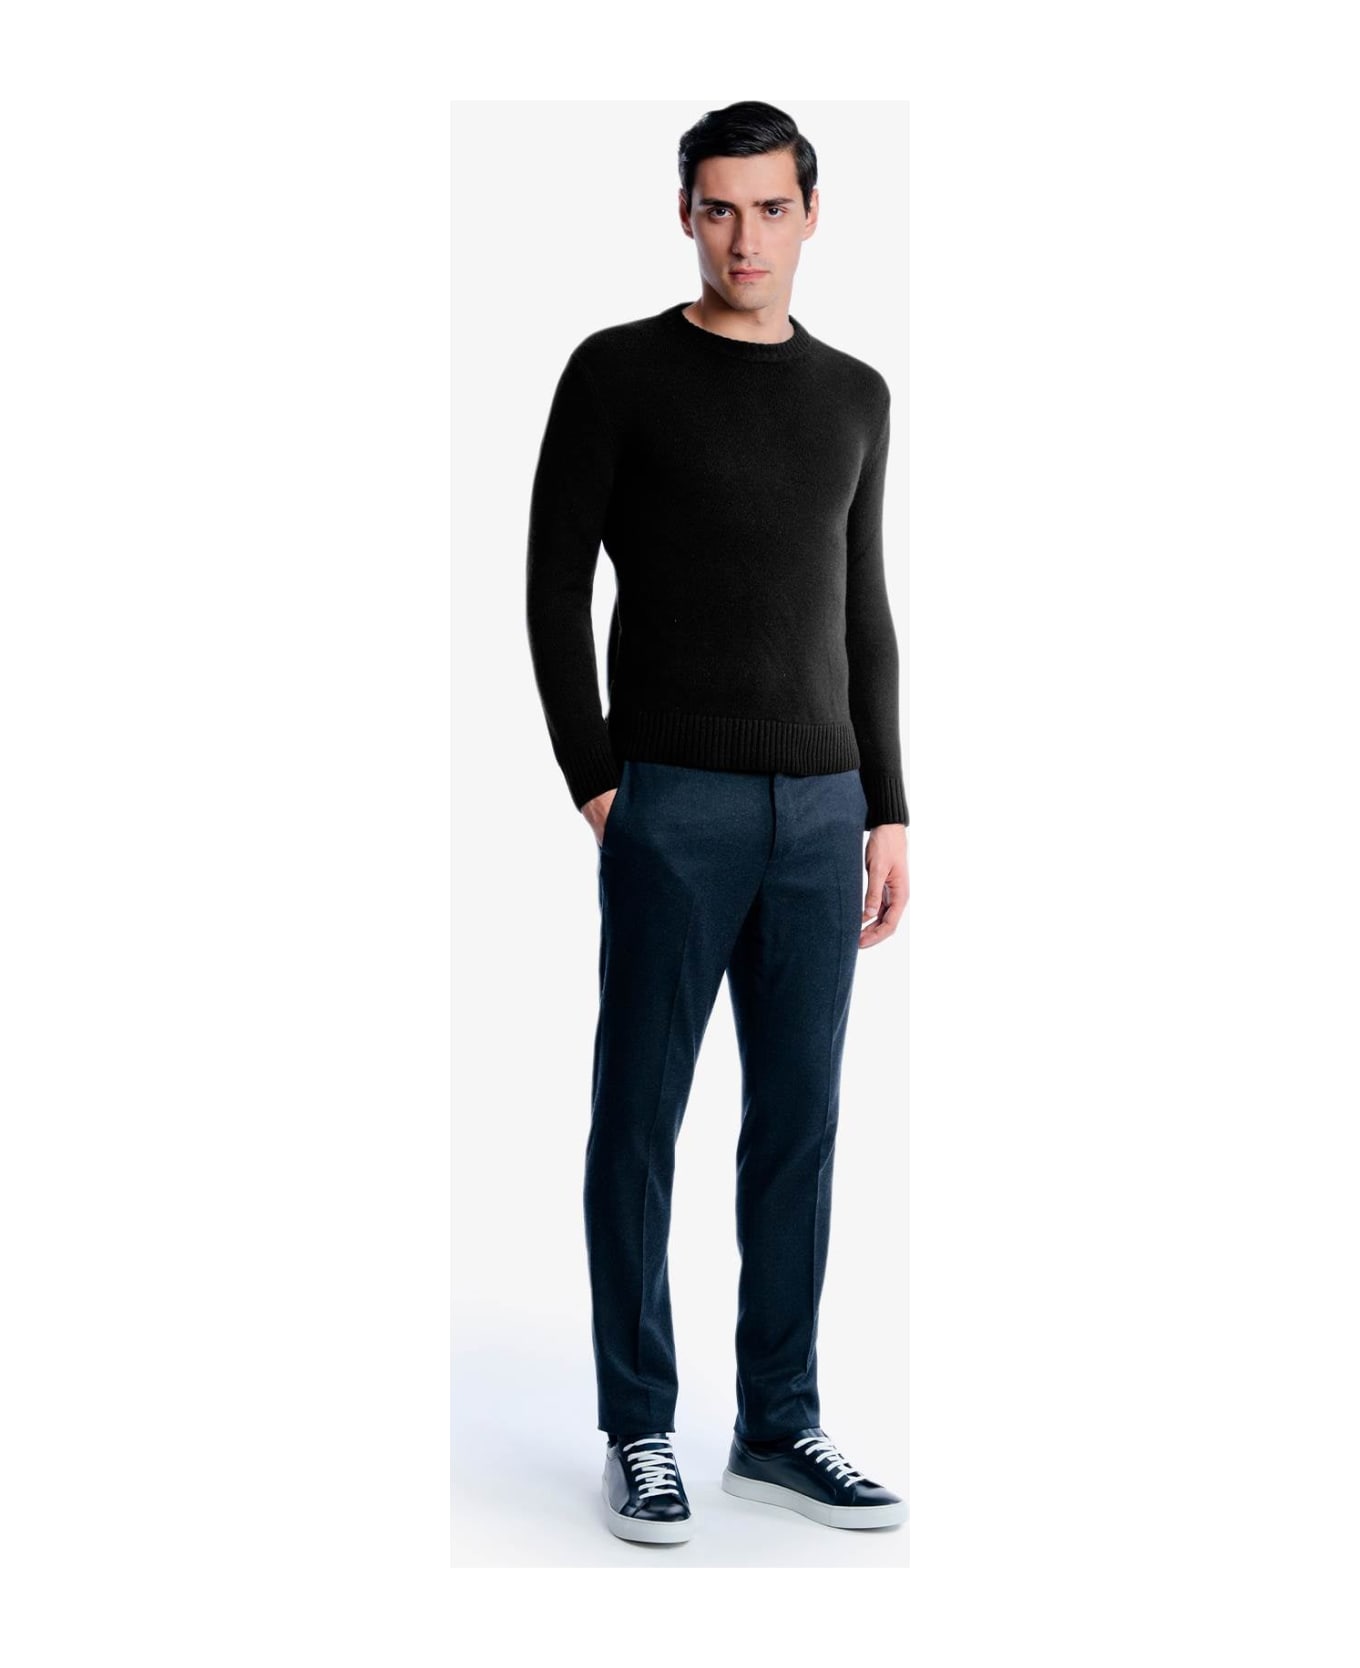 Larusmiani Crew Neck Sweater 'diablerets' Sweater - Black